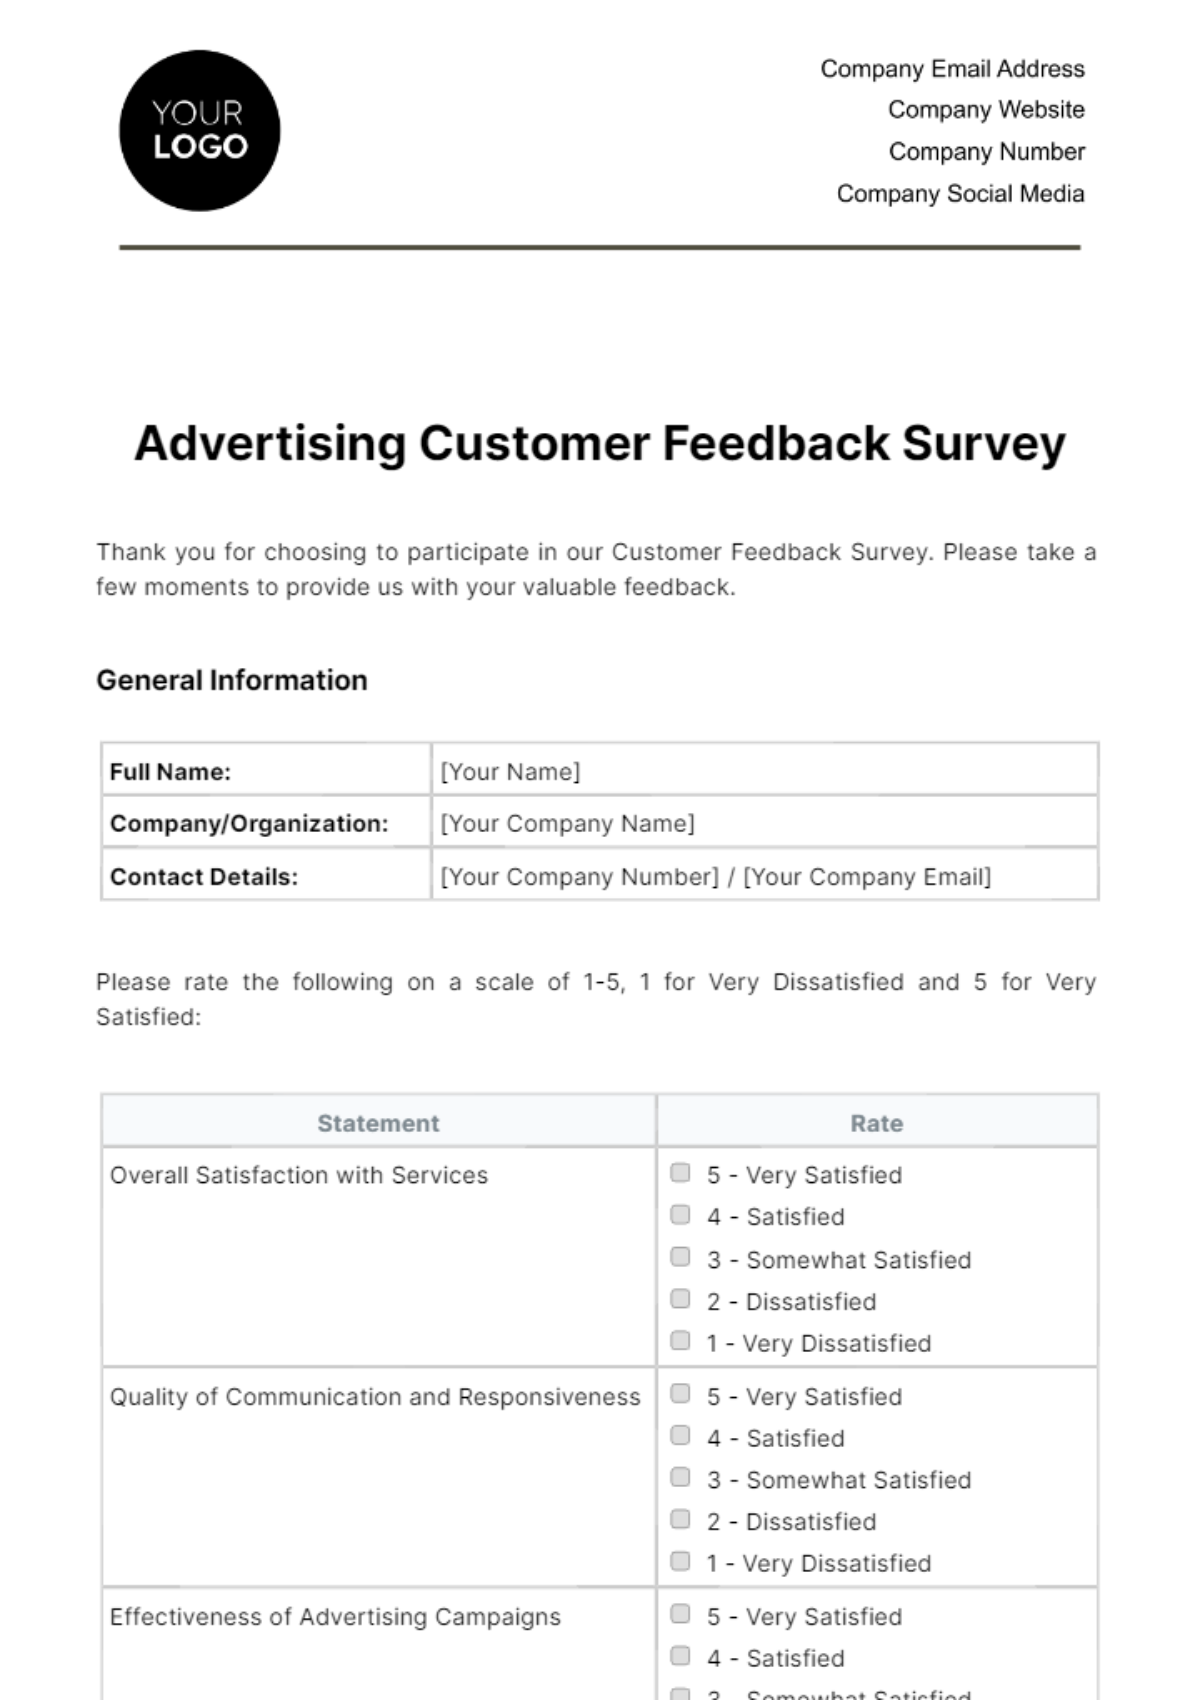 Free Advertising Customer Feedback Survey Template